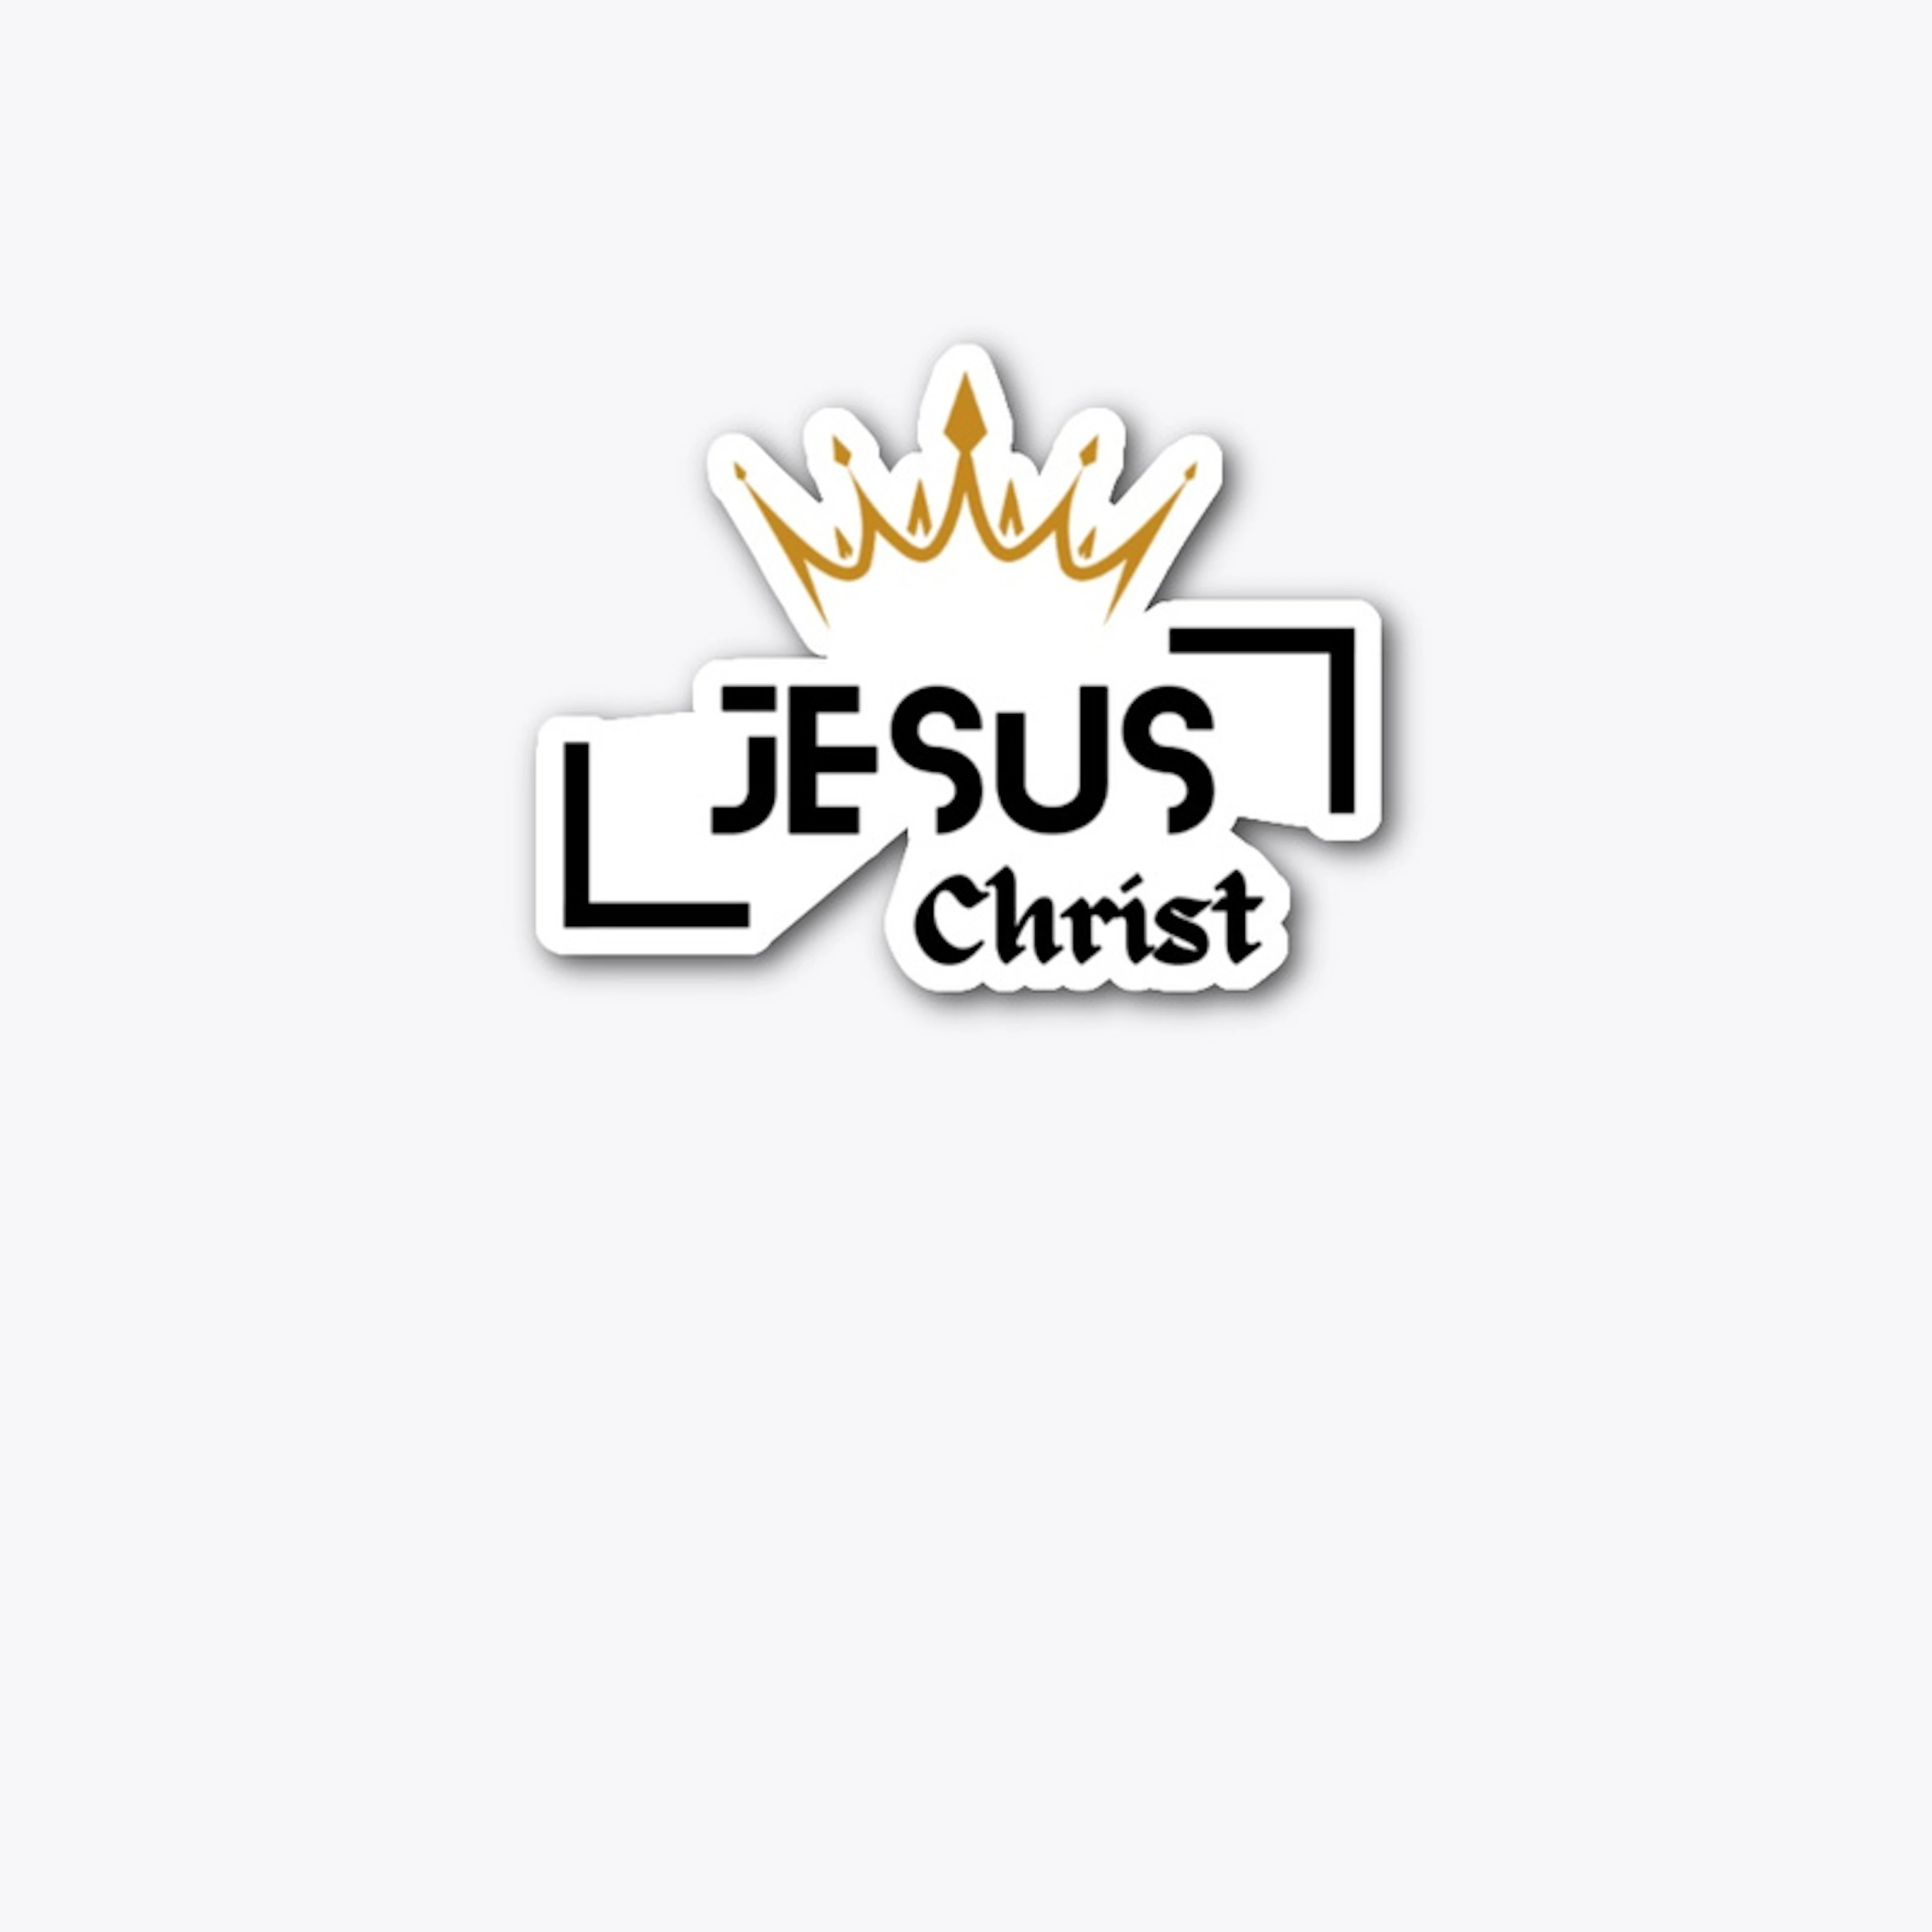 Jesus Christ Is King